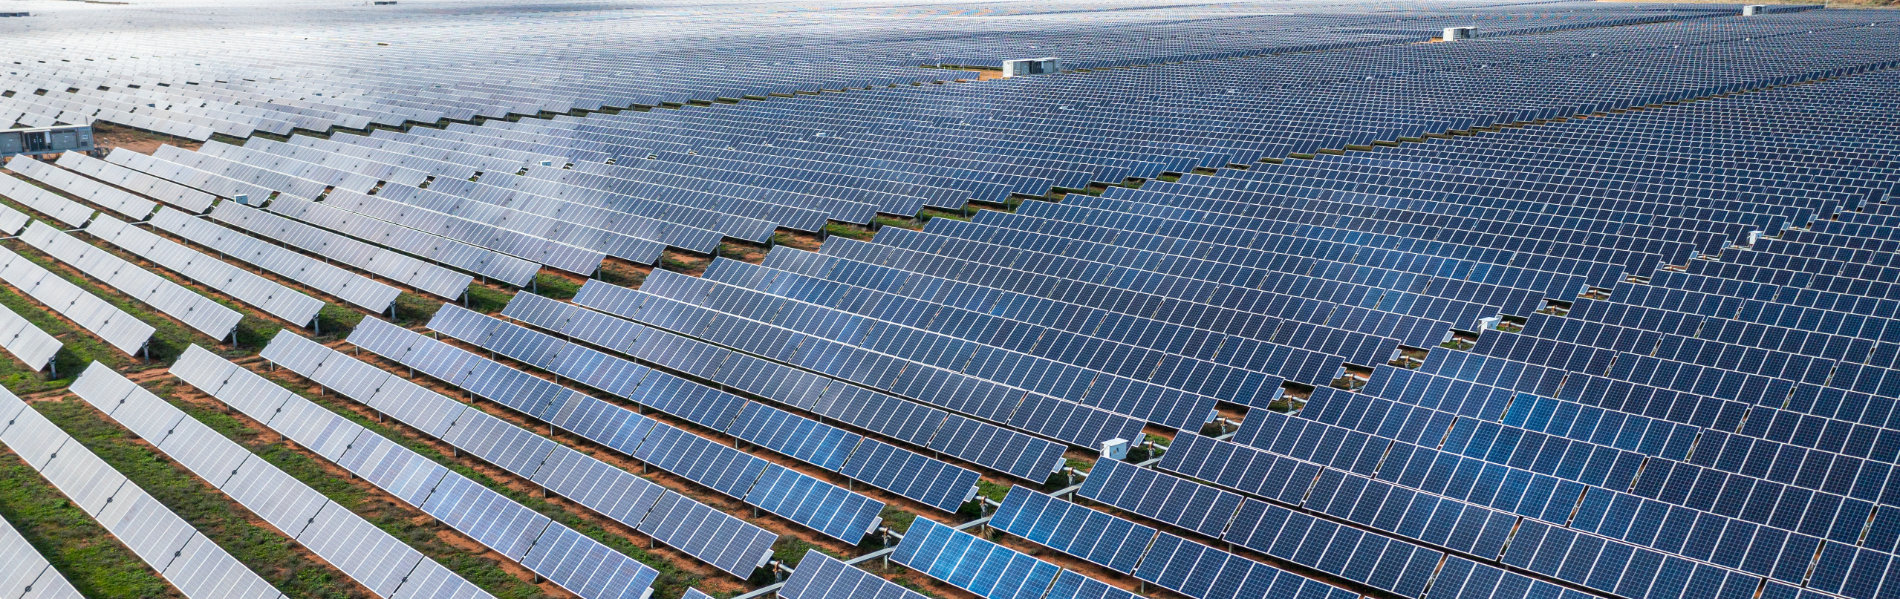 Drone photo of solar farm